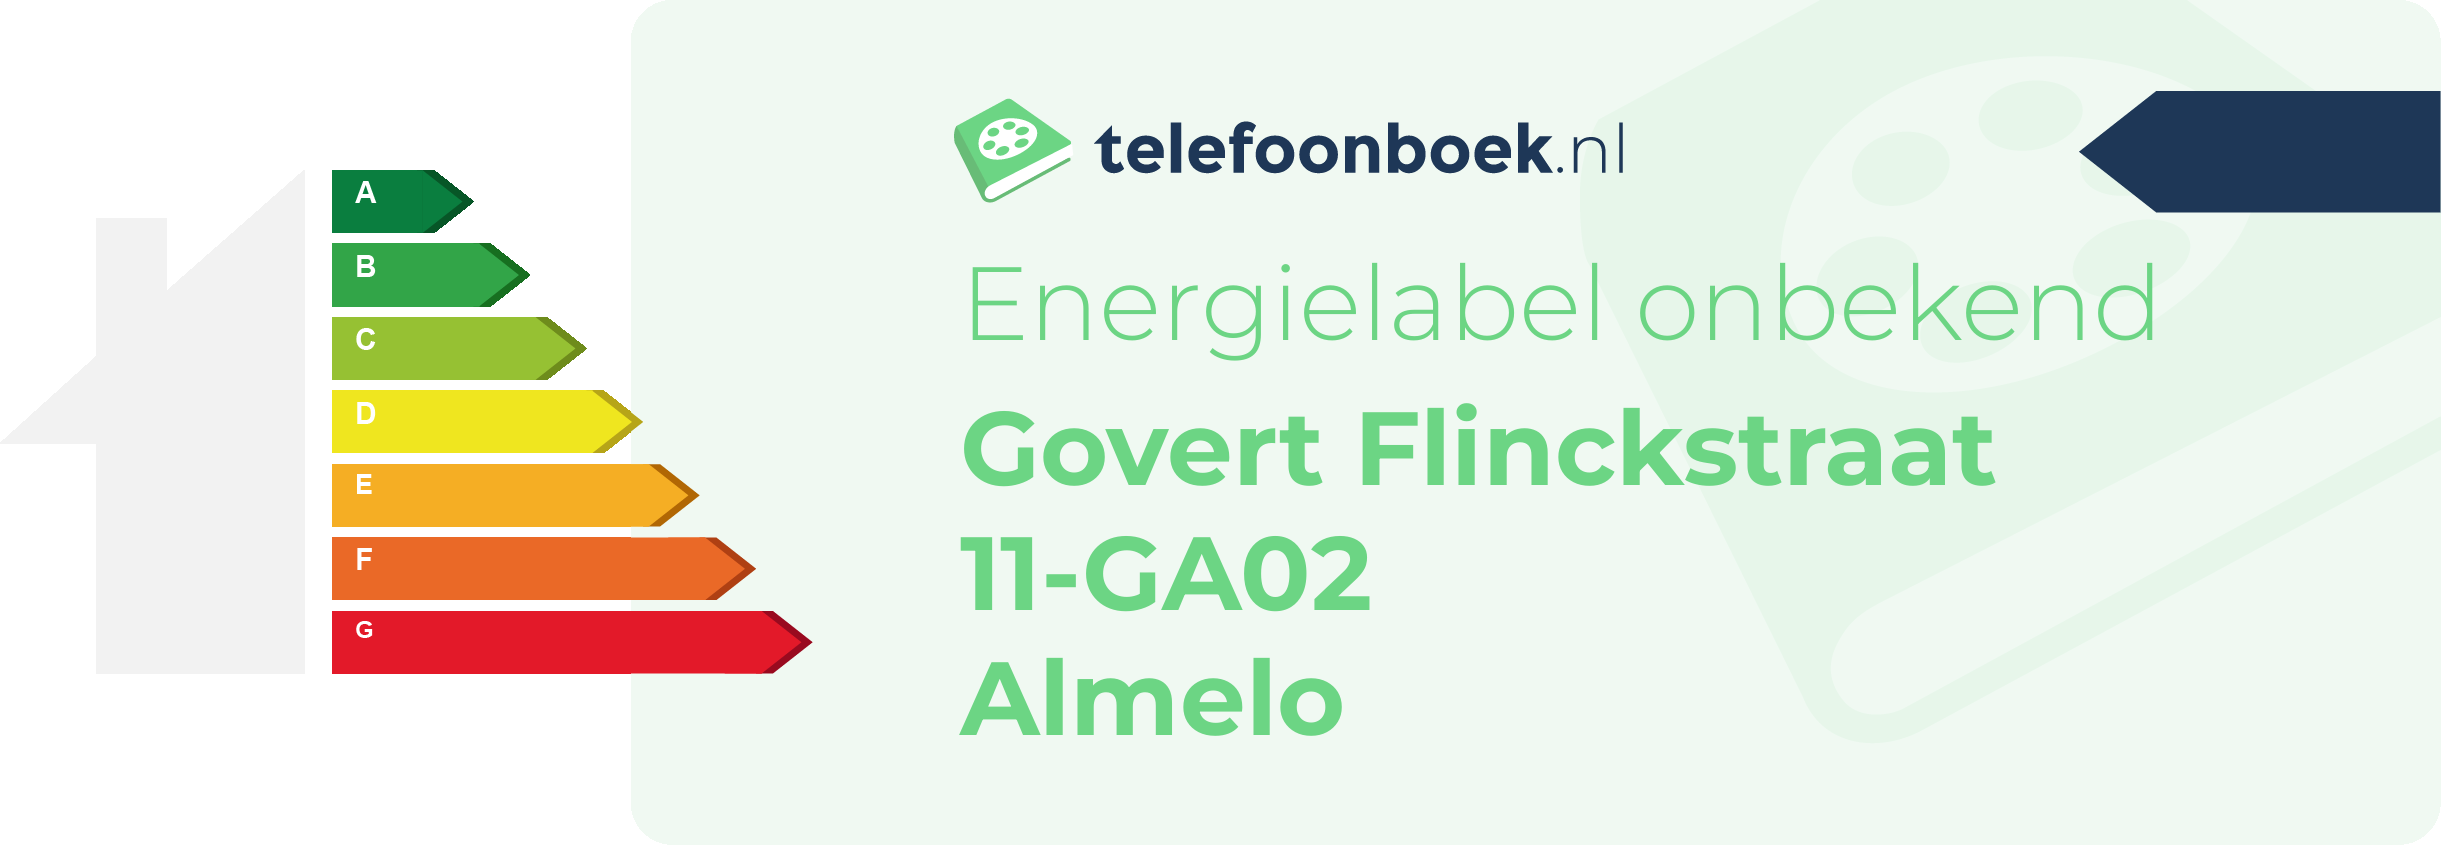 Energielabel Govert Flinckstraat 11-GA02 Almelo